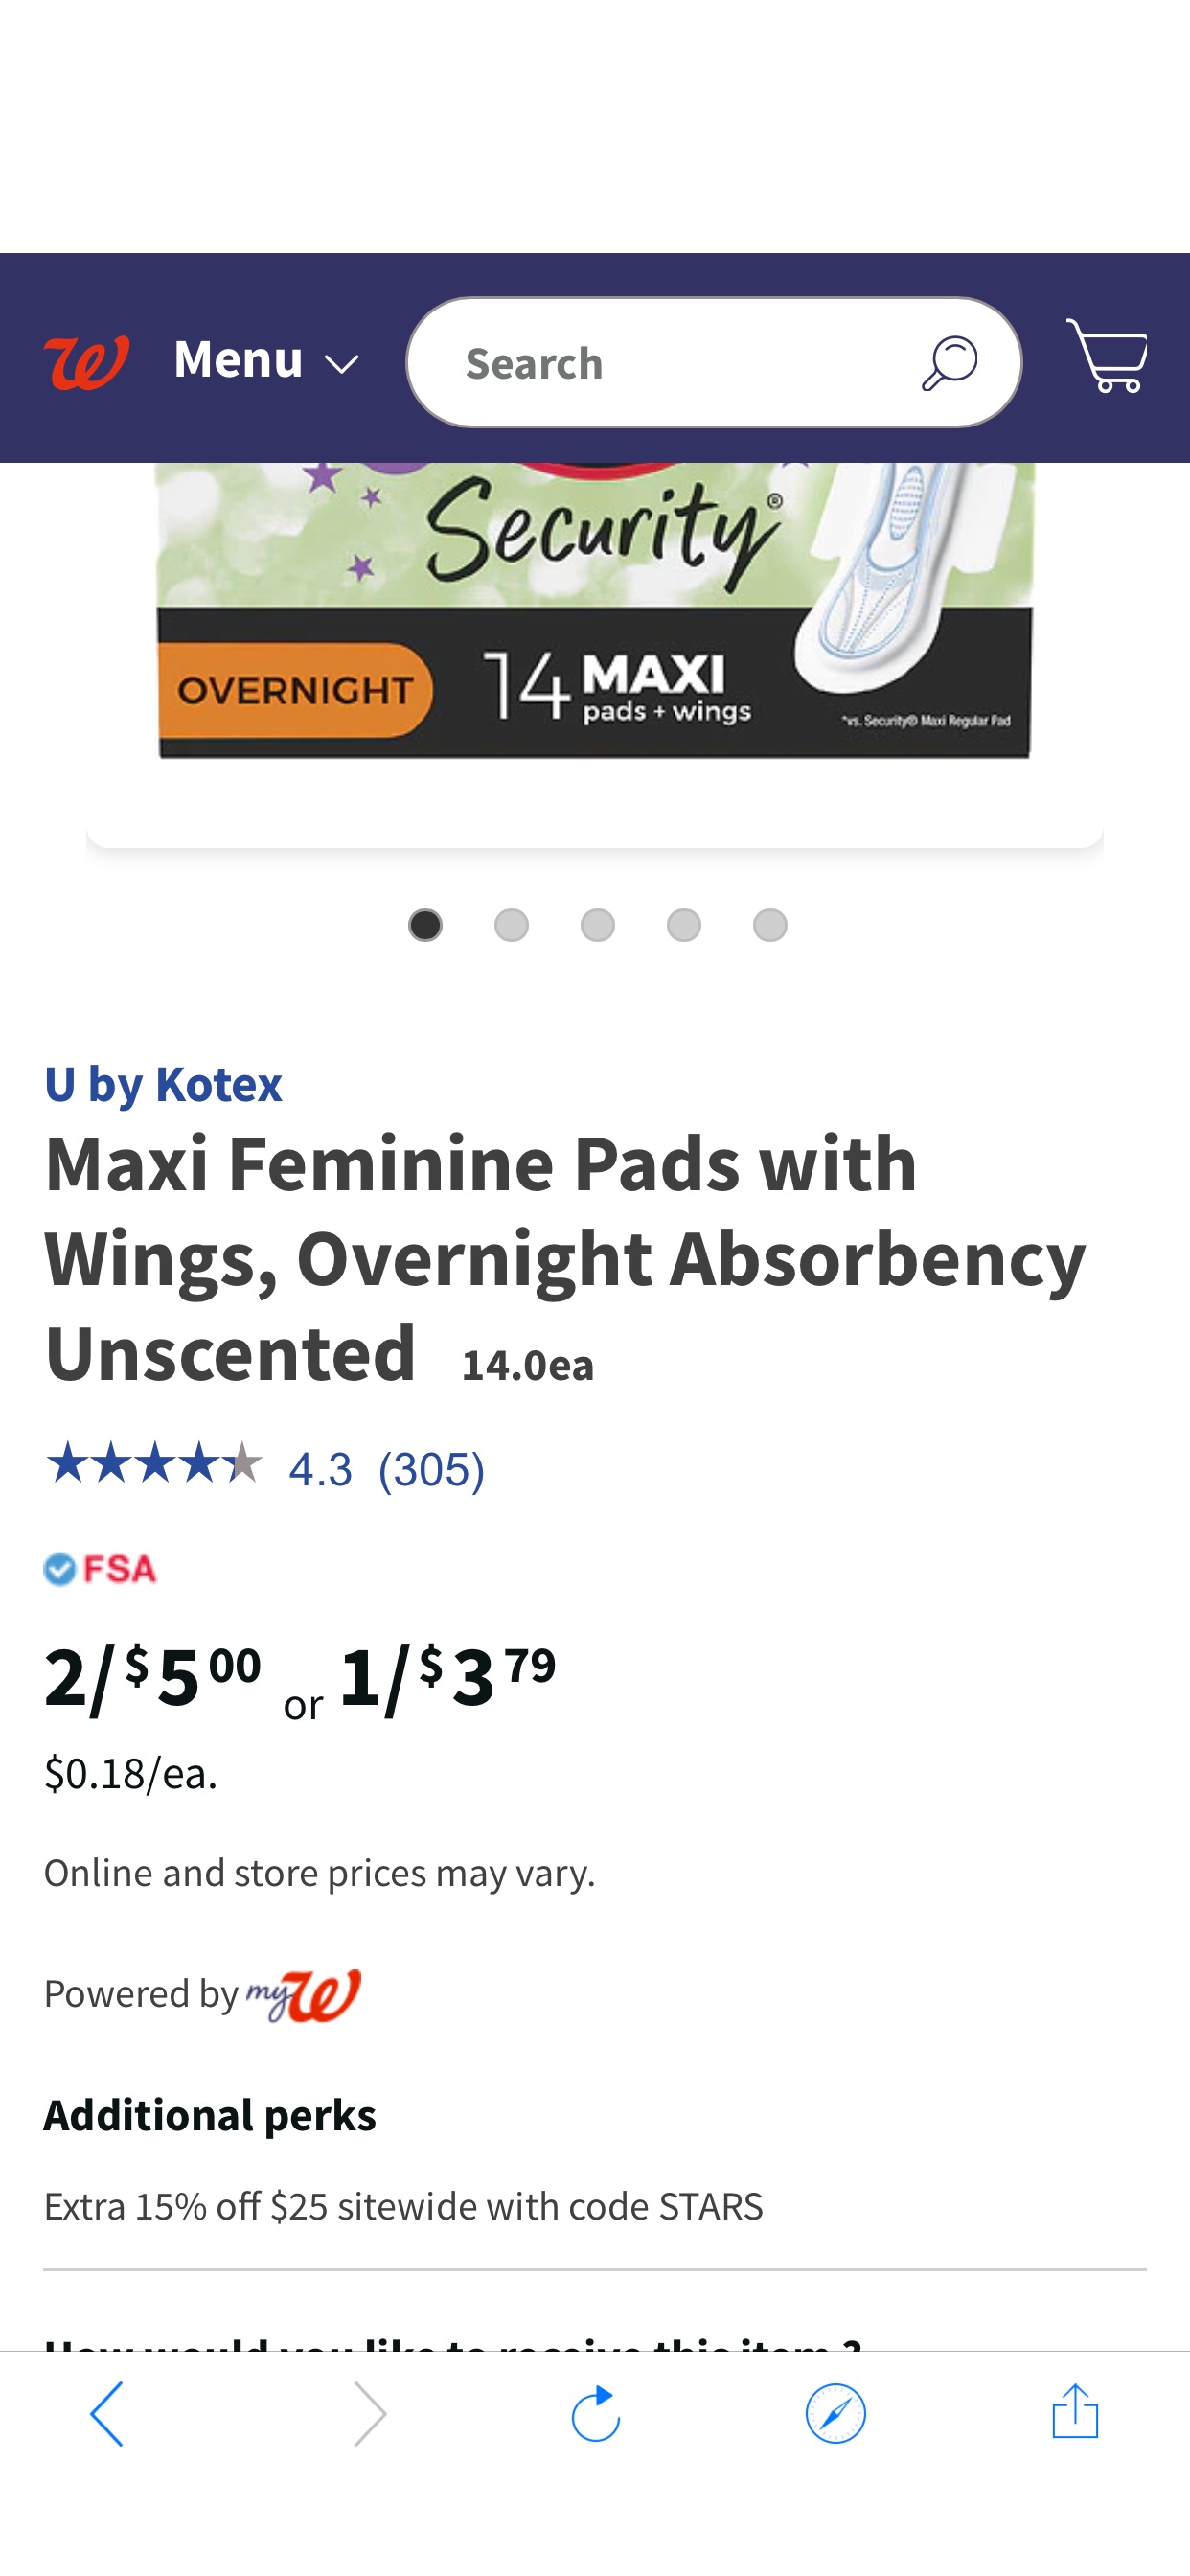 U by Kotex Maxi Feminine Pads with Wings, Overnight Absorbency Unscented | Walgreens
两包只要五刀 可以用减4刀的coupon 两包只要1刀